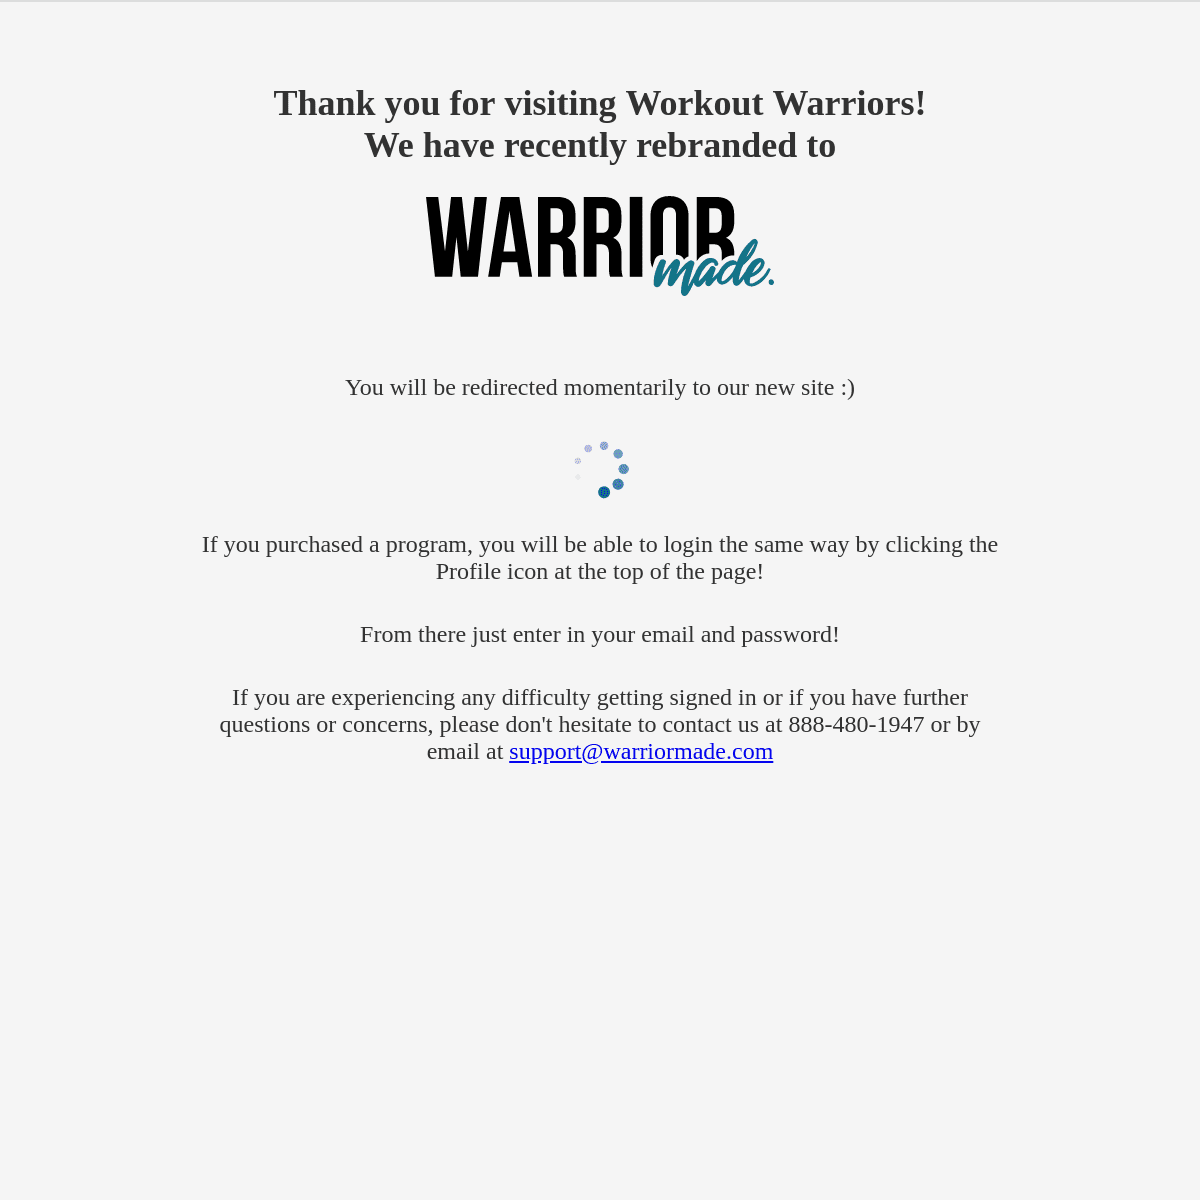 A complete backup of workoutwarriors.com